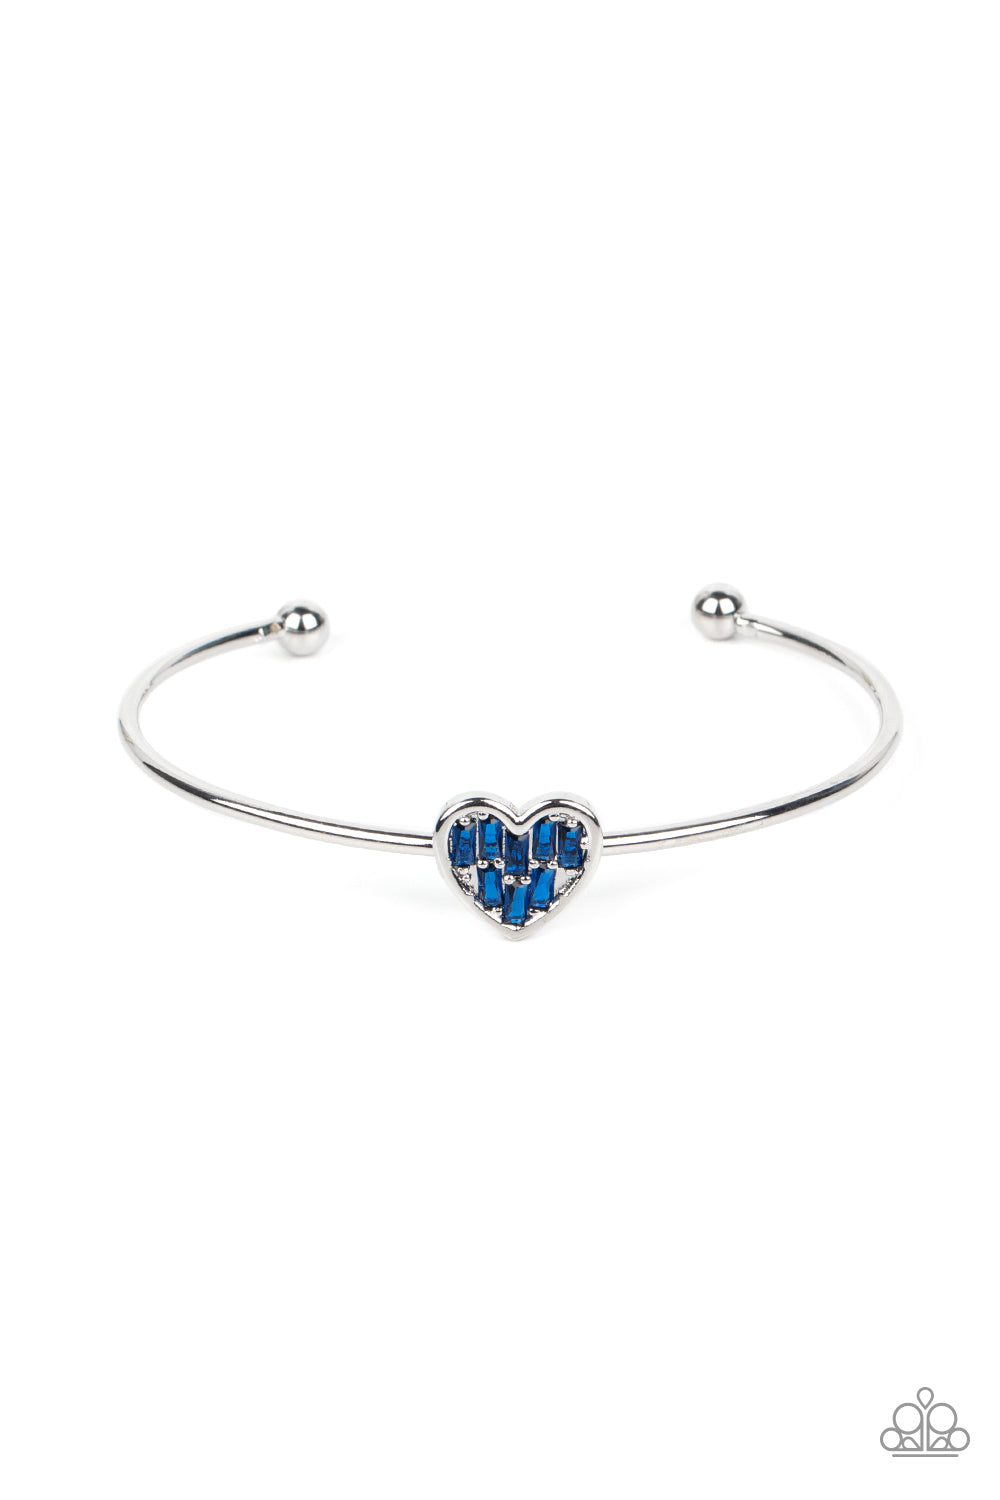 Heart of Ice - Blue (Heart Rhinestone) Bracelet freeshipping - JewLz4u Gemstone Gallery